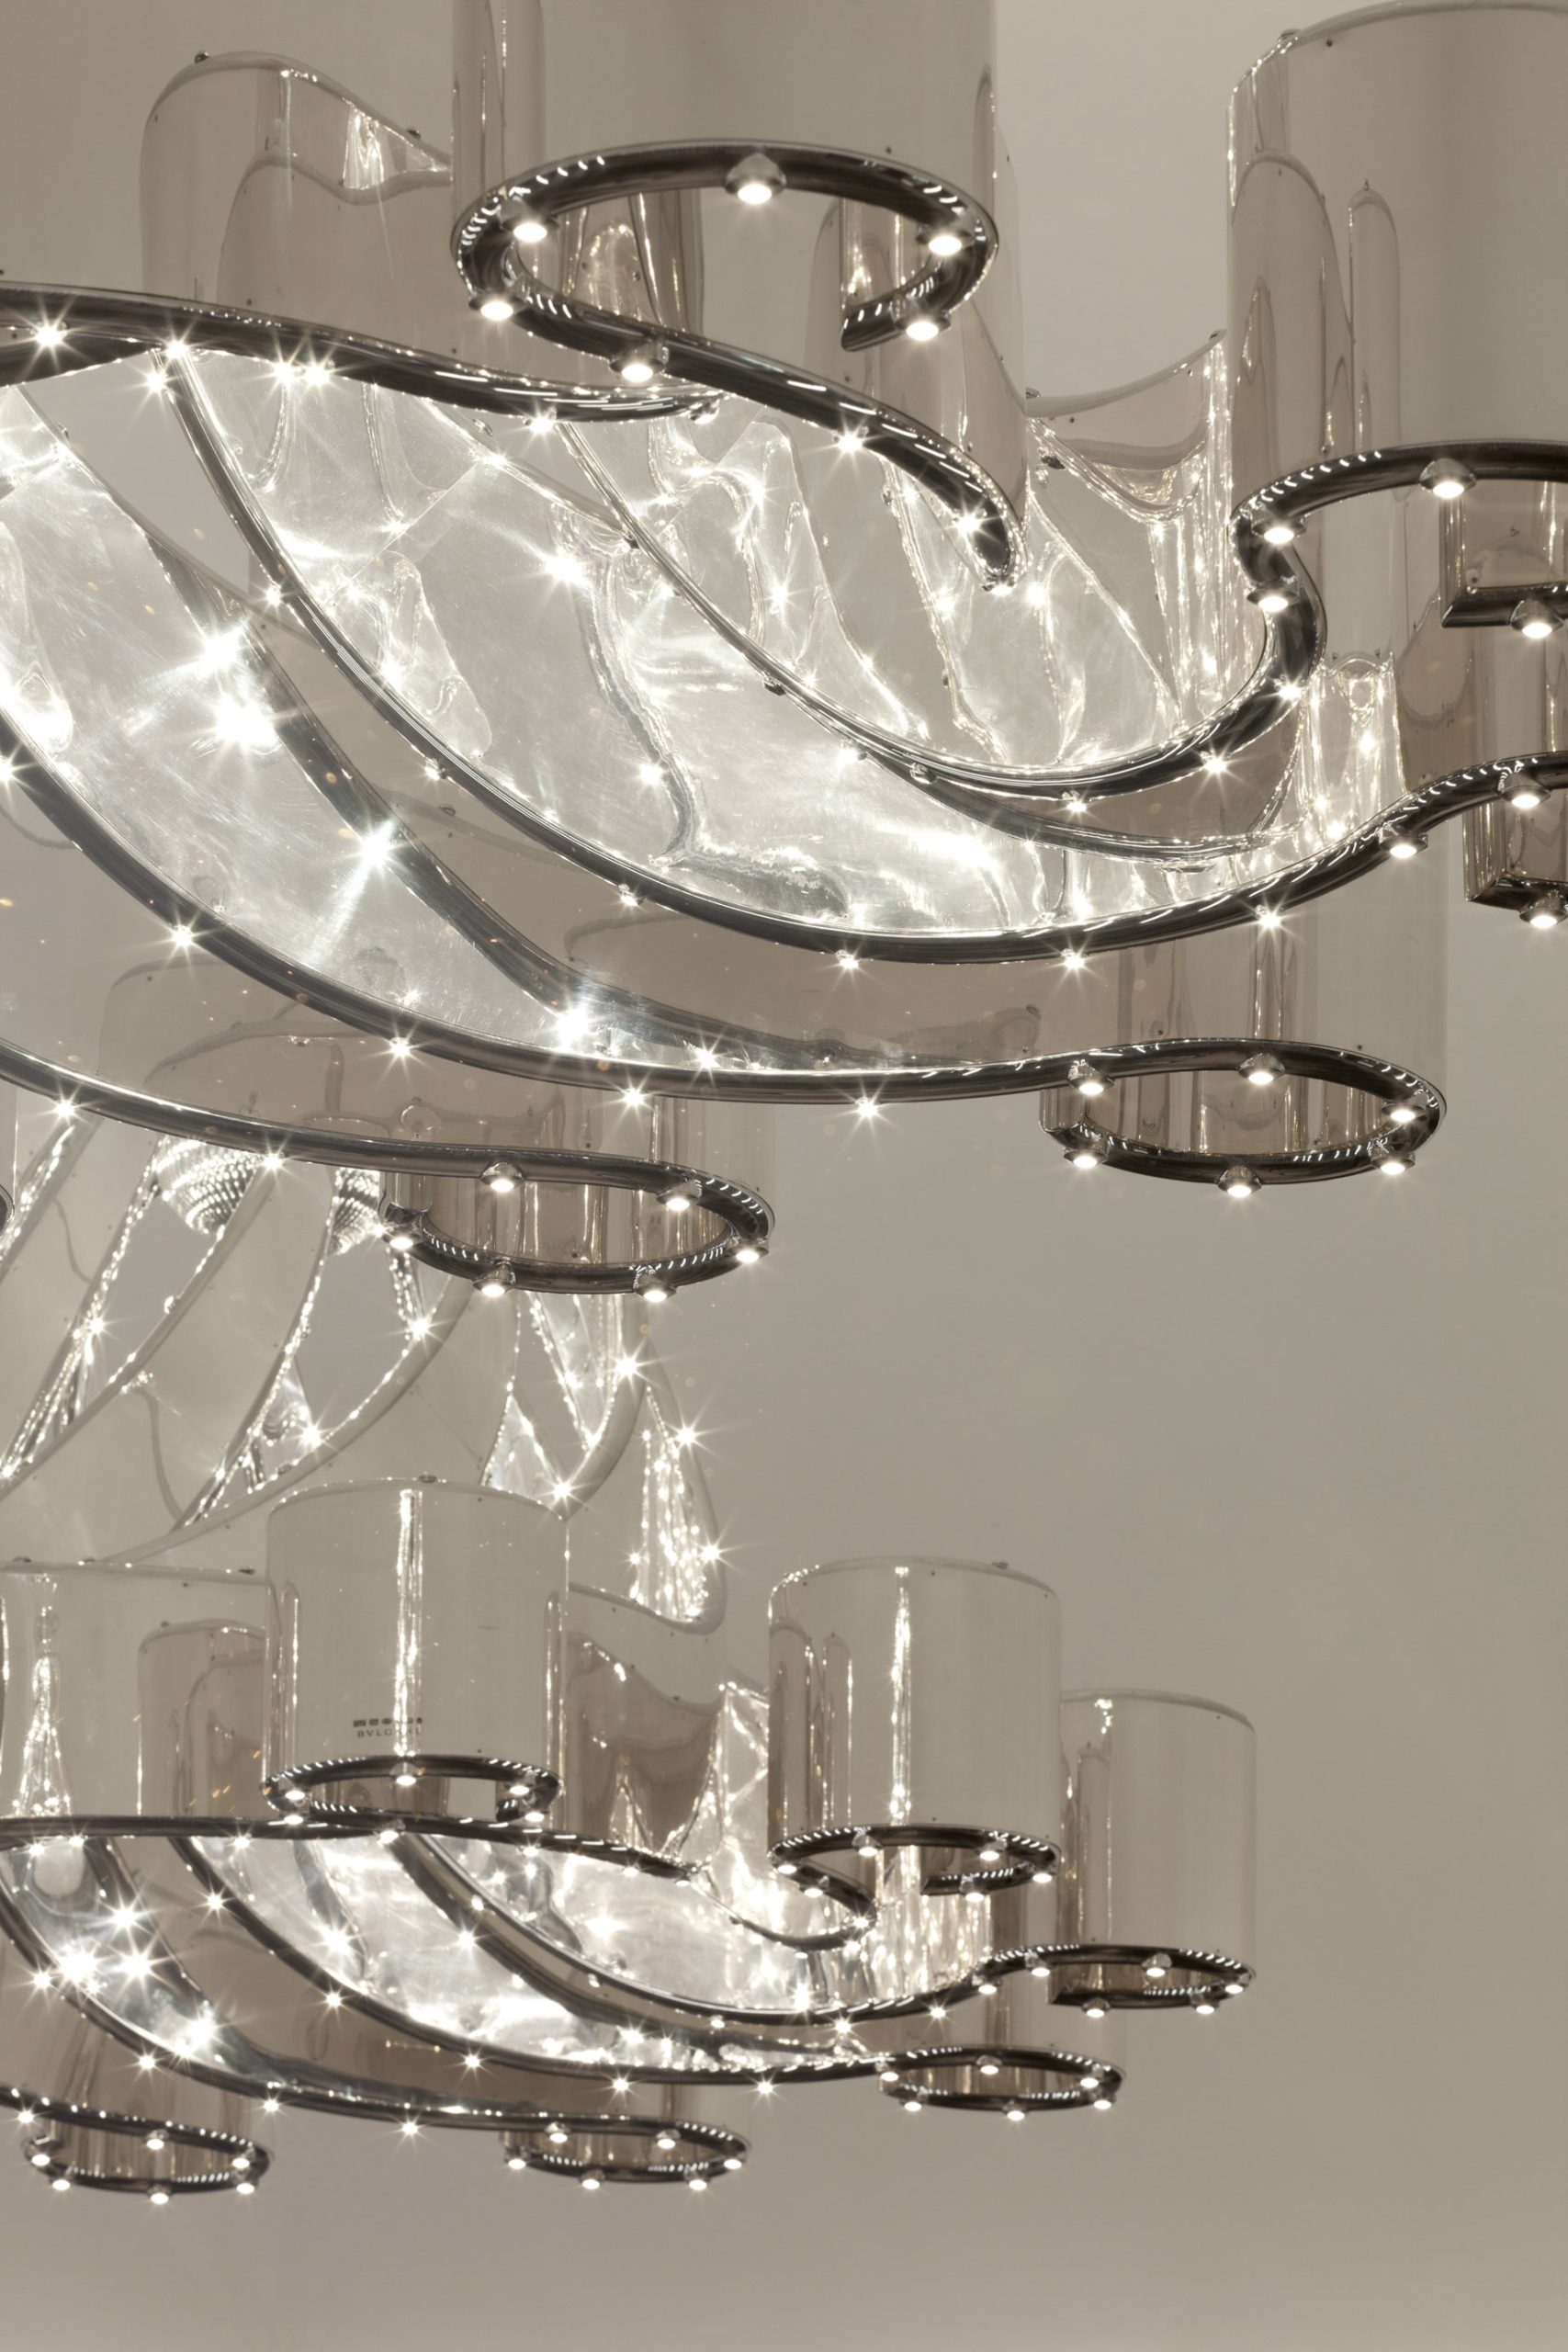 Bvlgari Hotel London – Knightsbridge, London, UK – Exquisite Glass Ceiling Chandelier